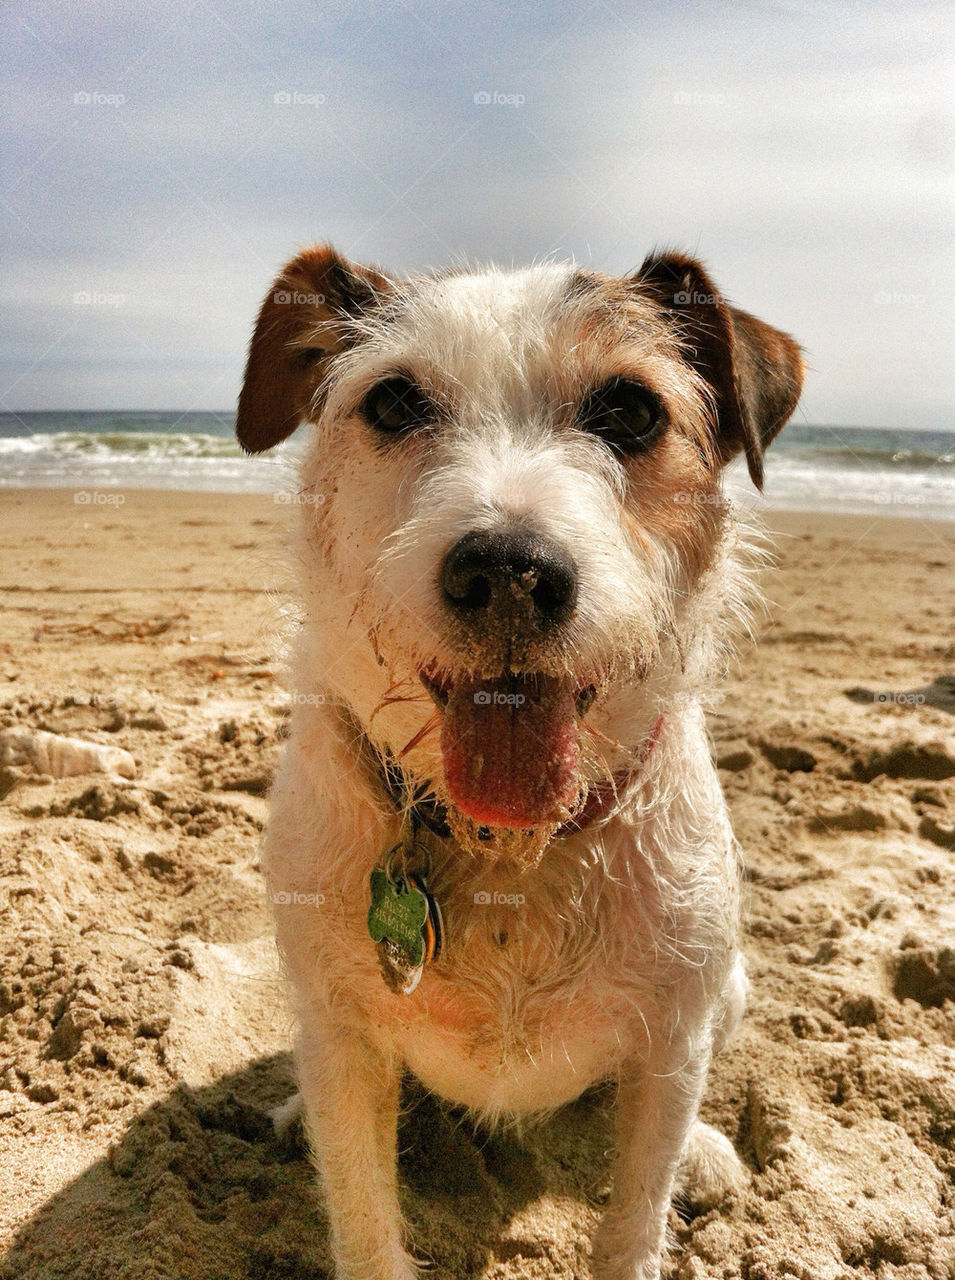 beach nature smile dog by infostyx